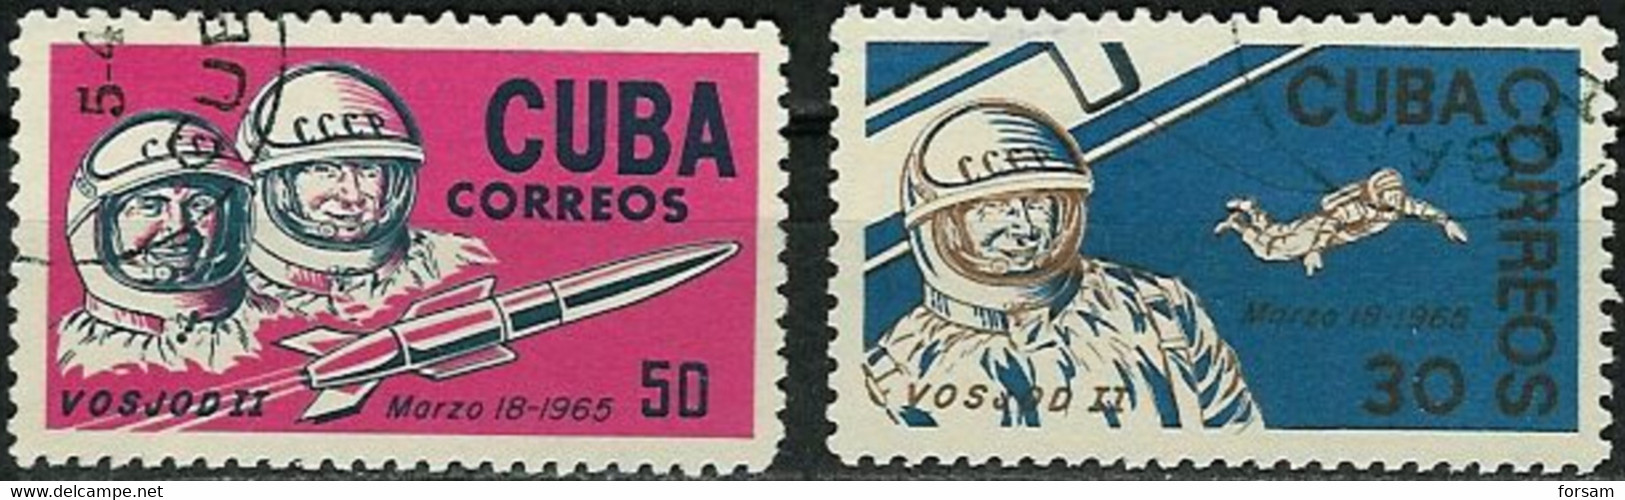 CUBA..1965..Michel # 1008-1009..used...MiCV - 2.60 Euro. - Usati